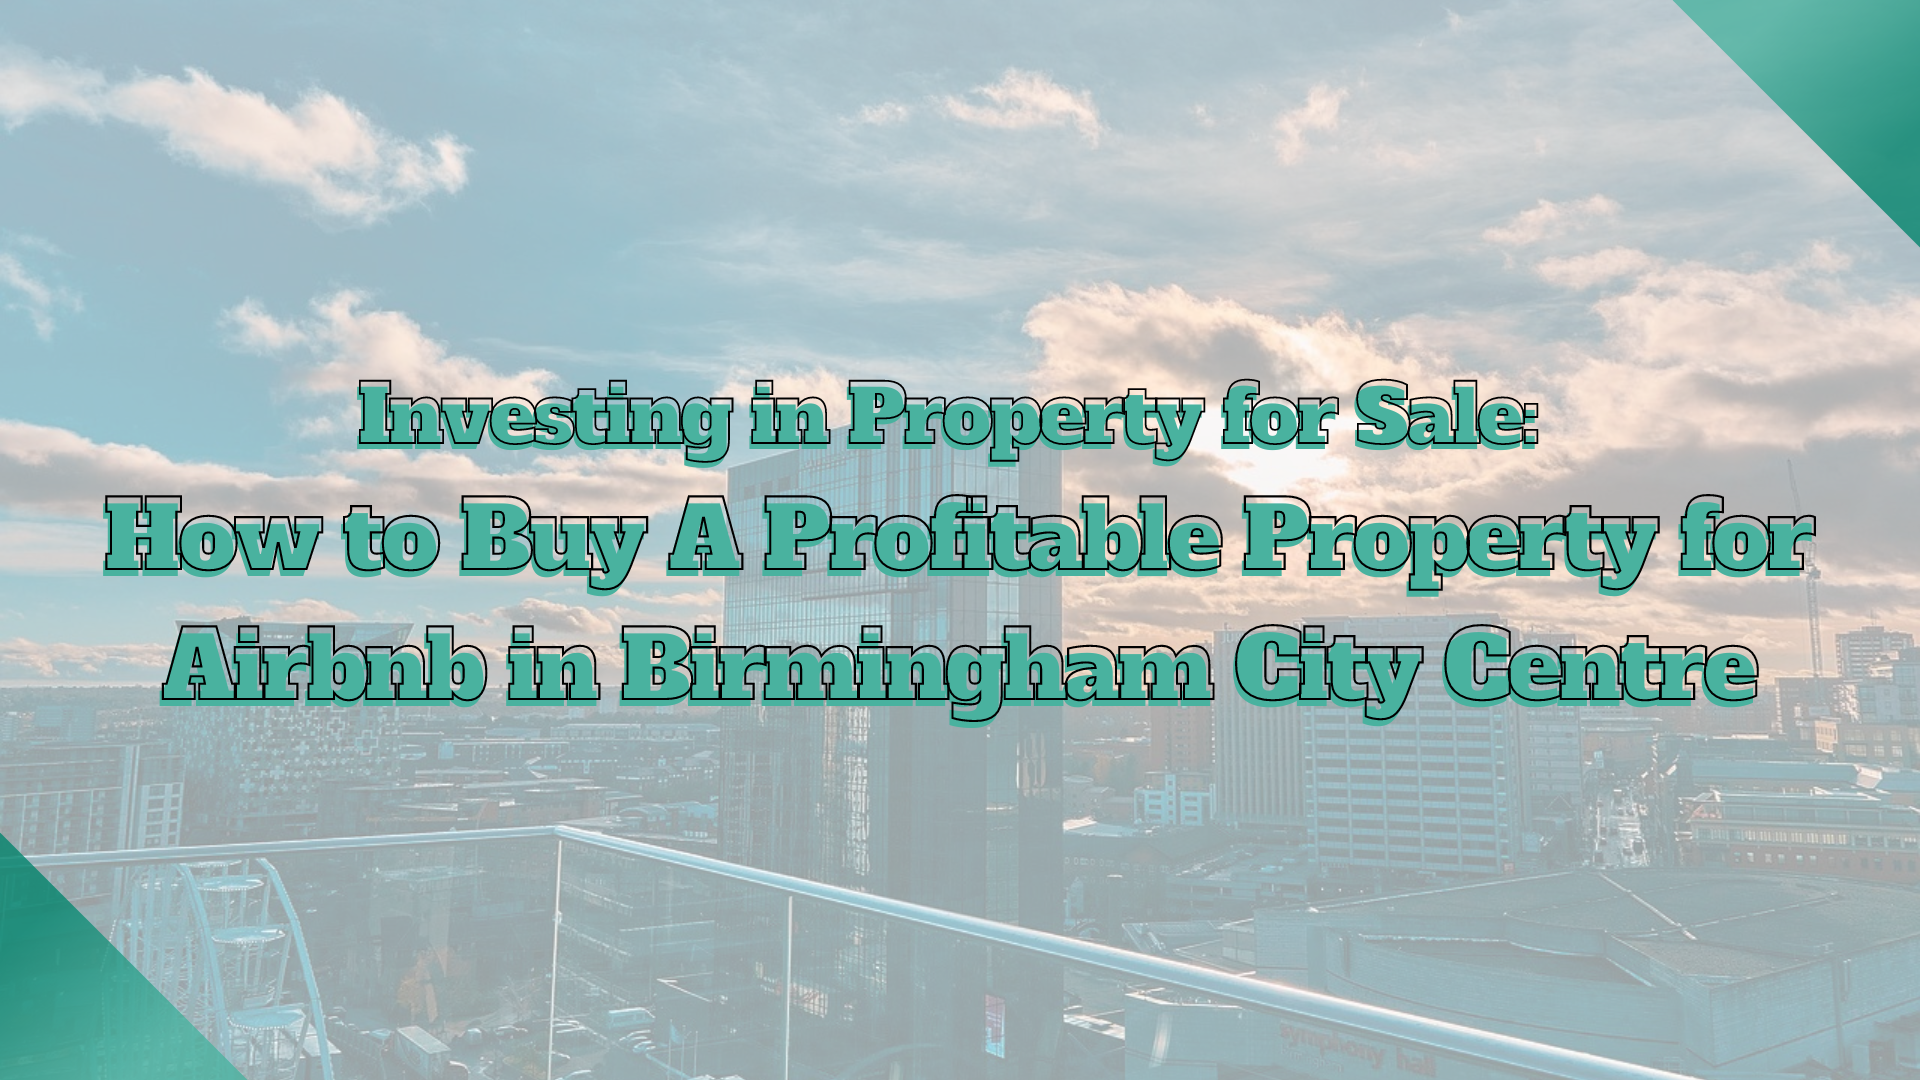 airbnb property for sale Birmingham City Centre